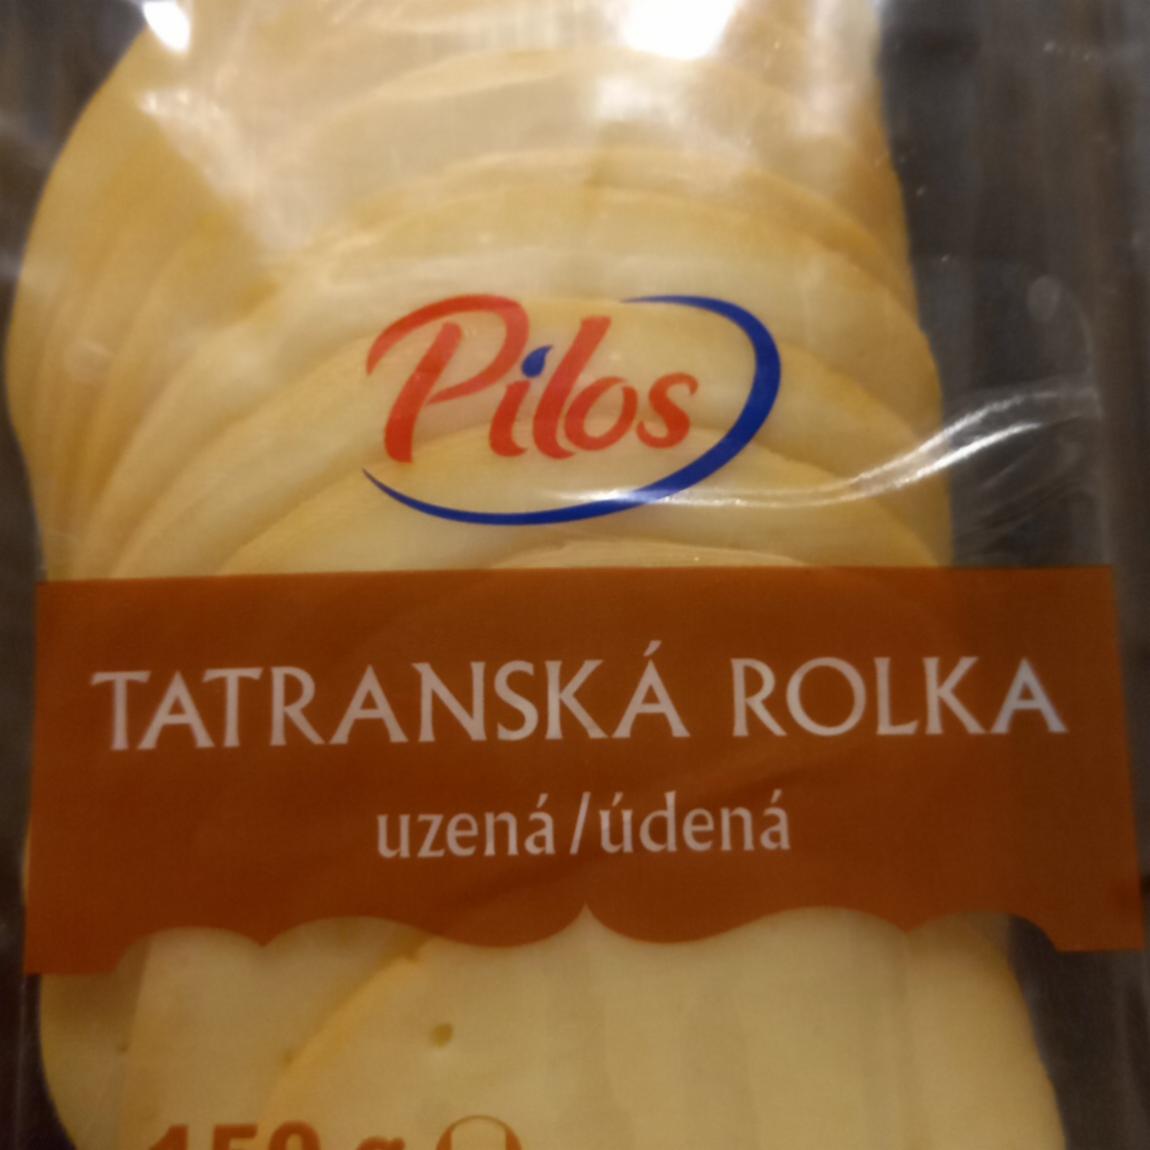 Fotografie - Tatranská rolka uzená Pilos